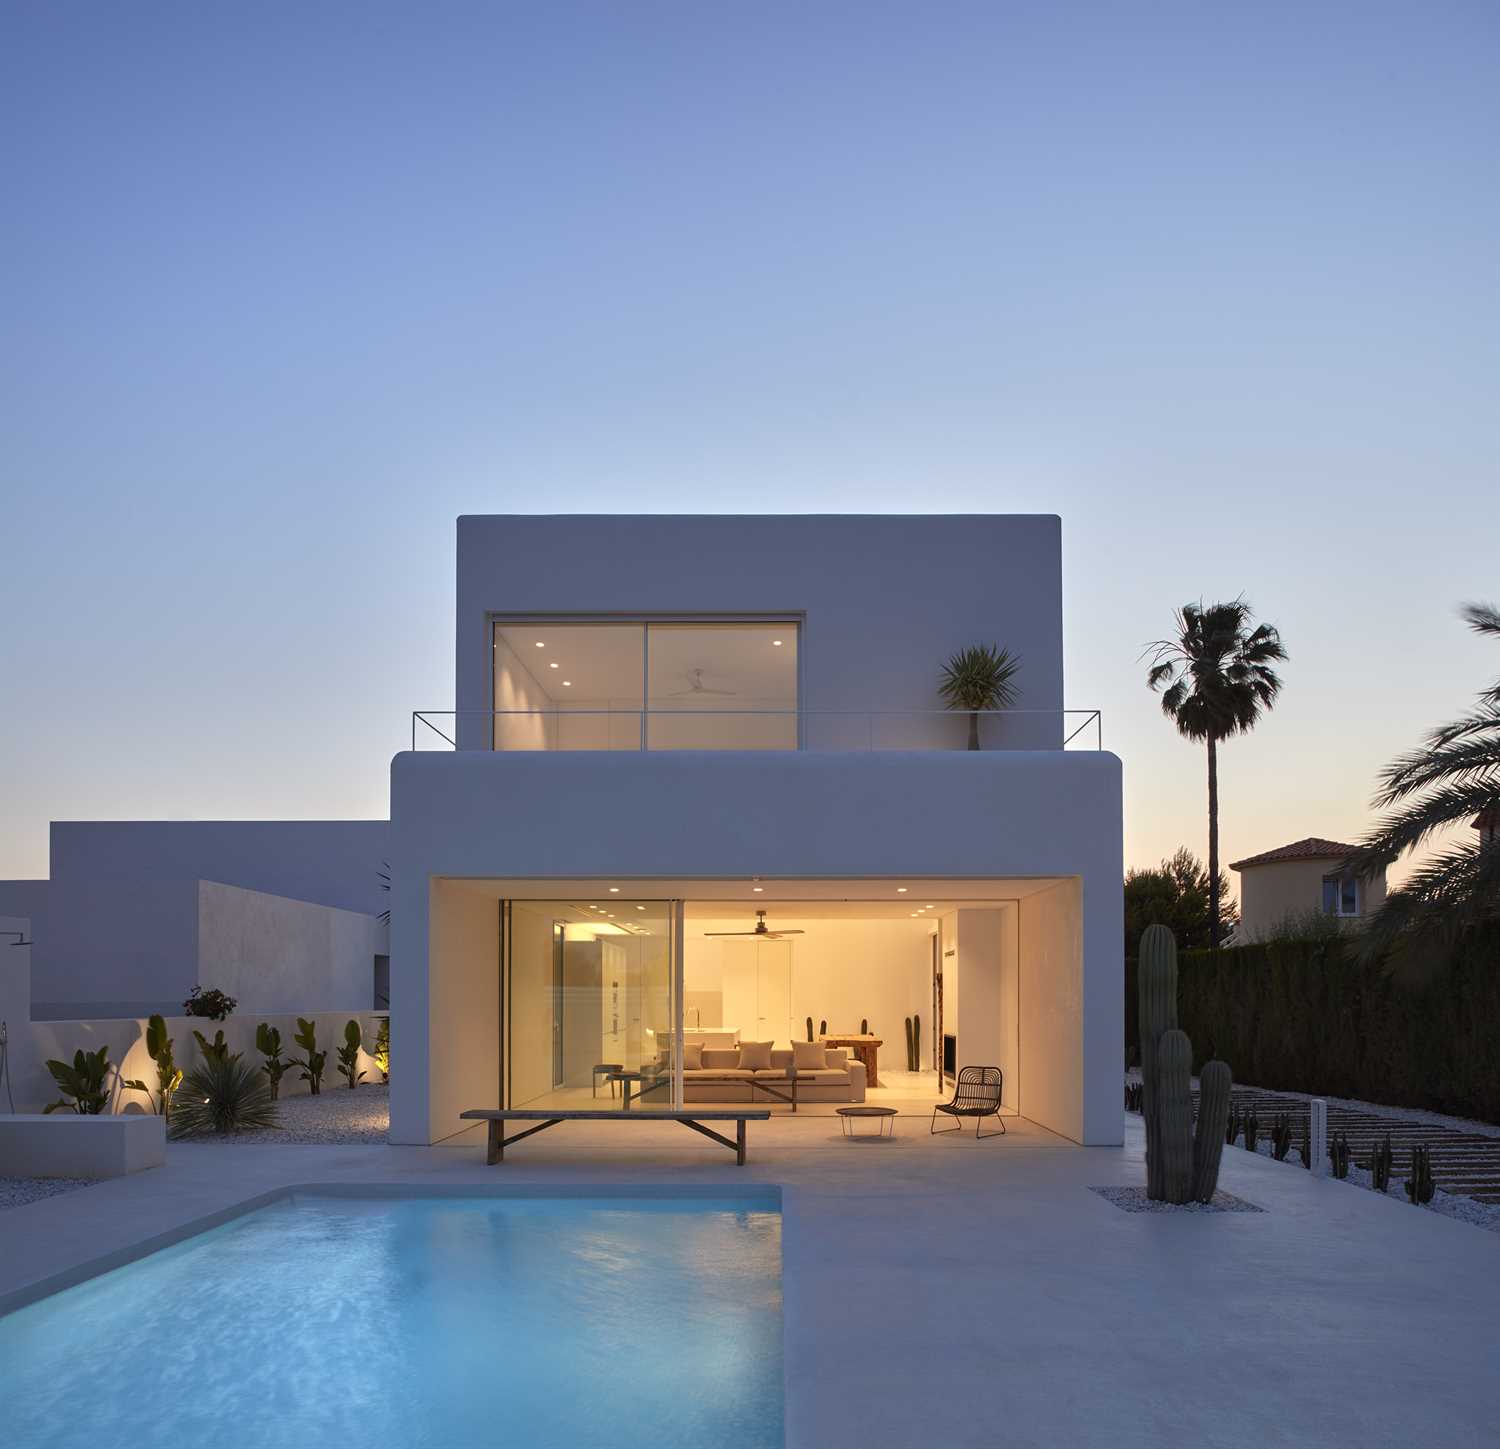 Microcemento bianco in facciata e piscina di abitazione moderna.